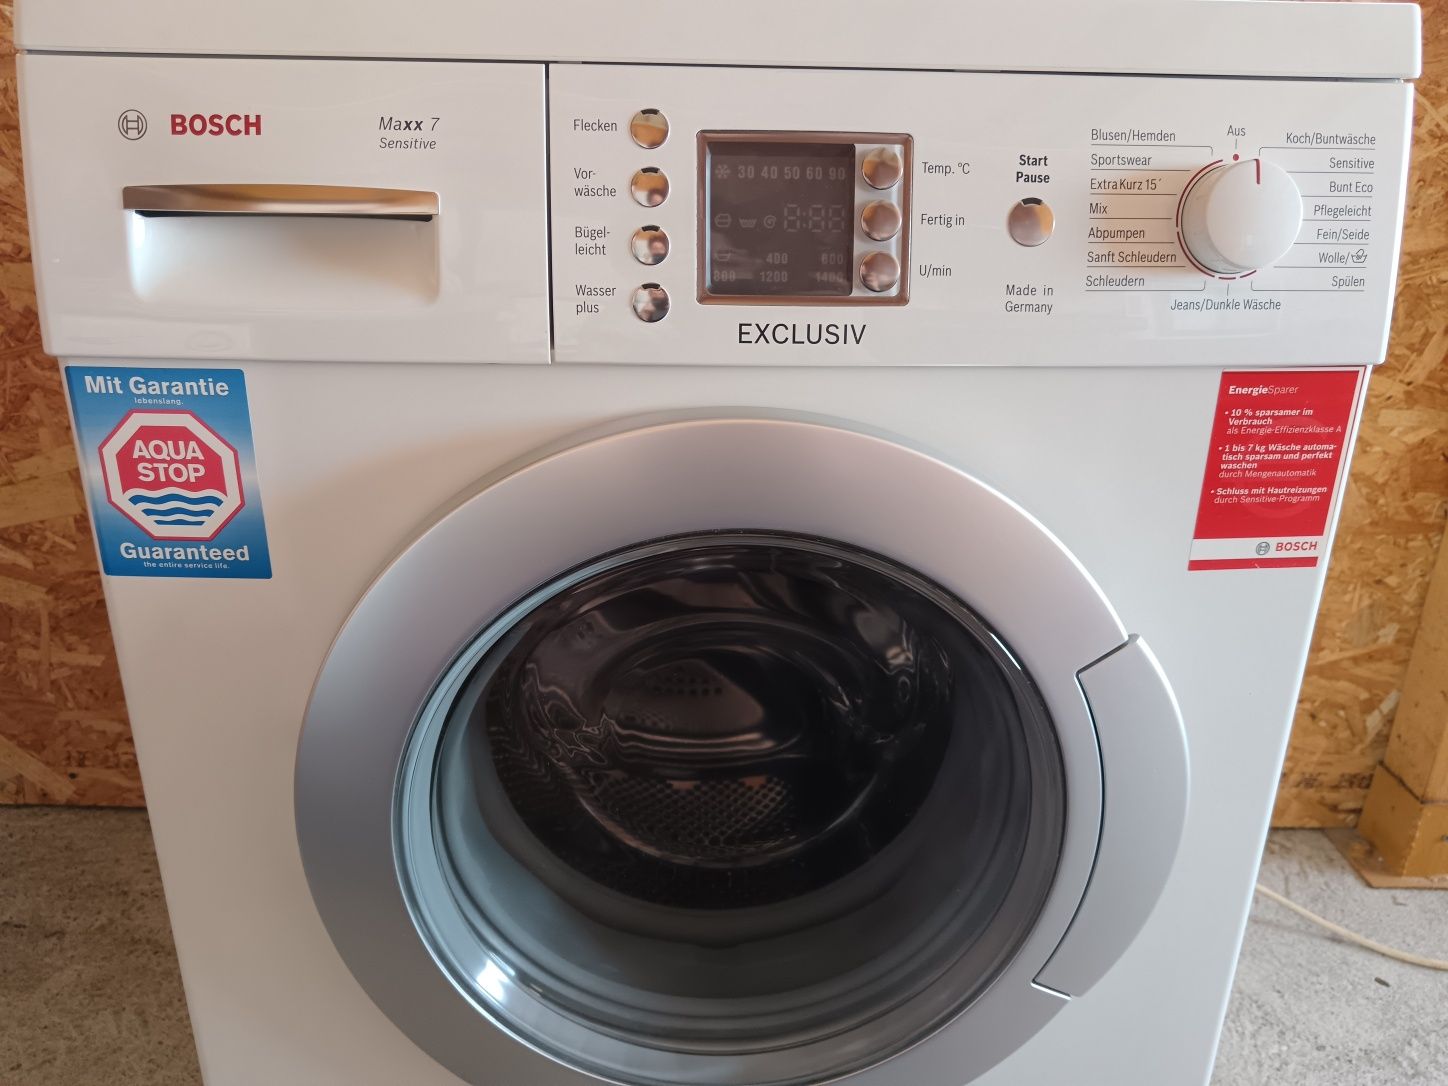 Mașina de spălat rufe, Bosch Maxx 7 Exclusiv, 7kg, 1400 rot/min